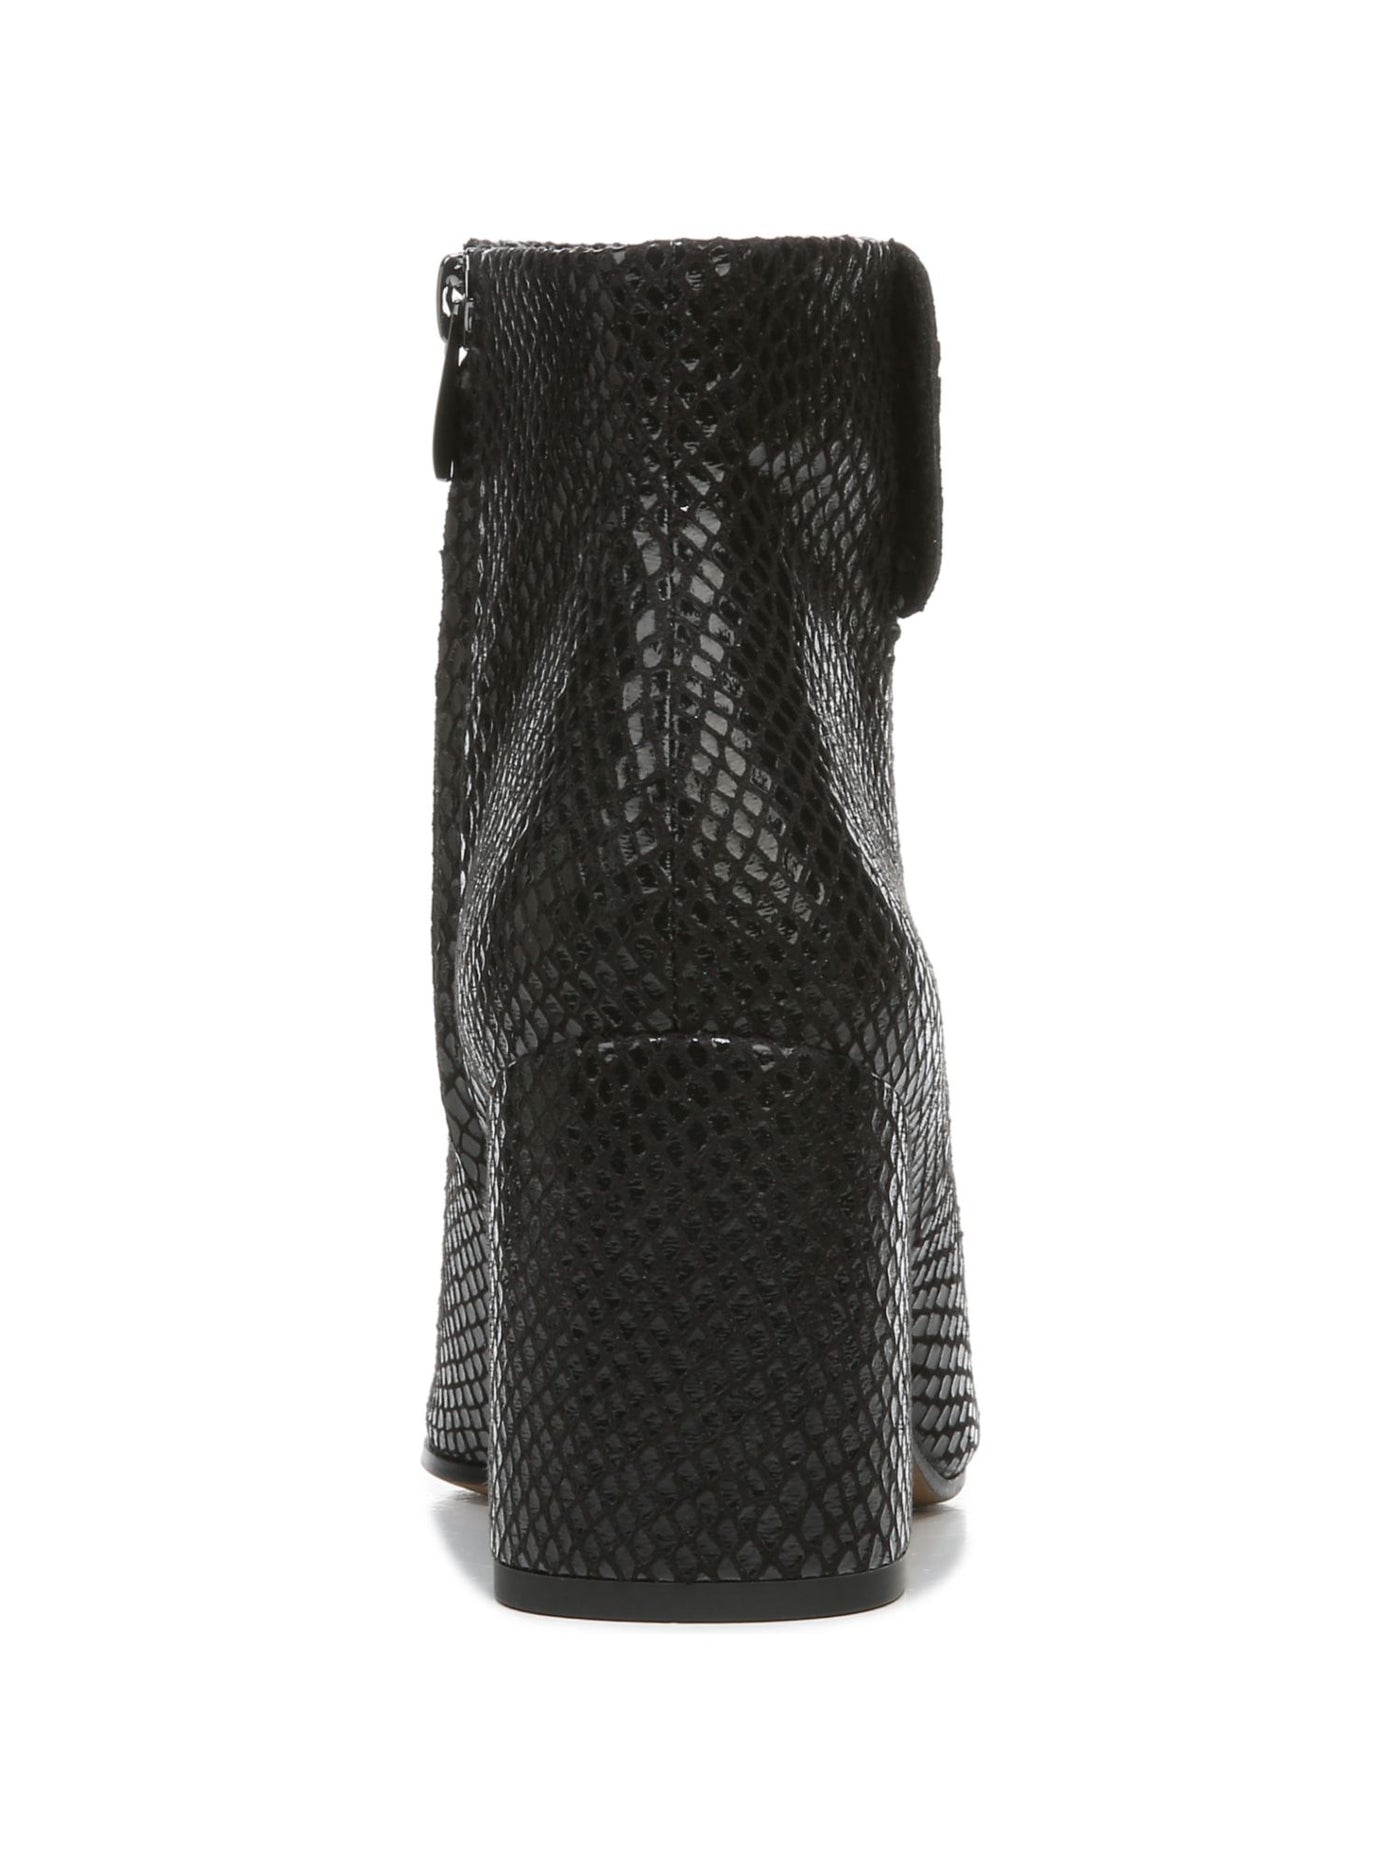 FRANCO SARTO Womens Black Snakeskin Marquee Almond Toe Block Heel Zip-Up Heeled Boots 8 M